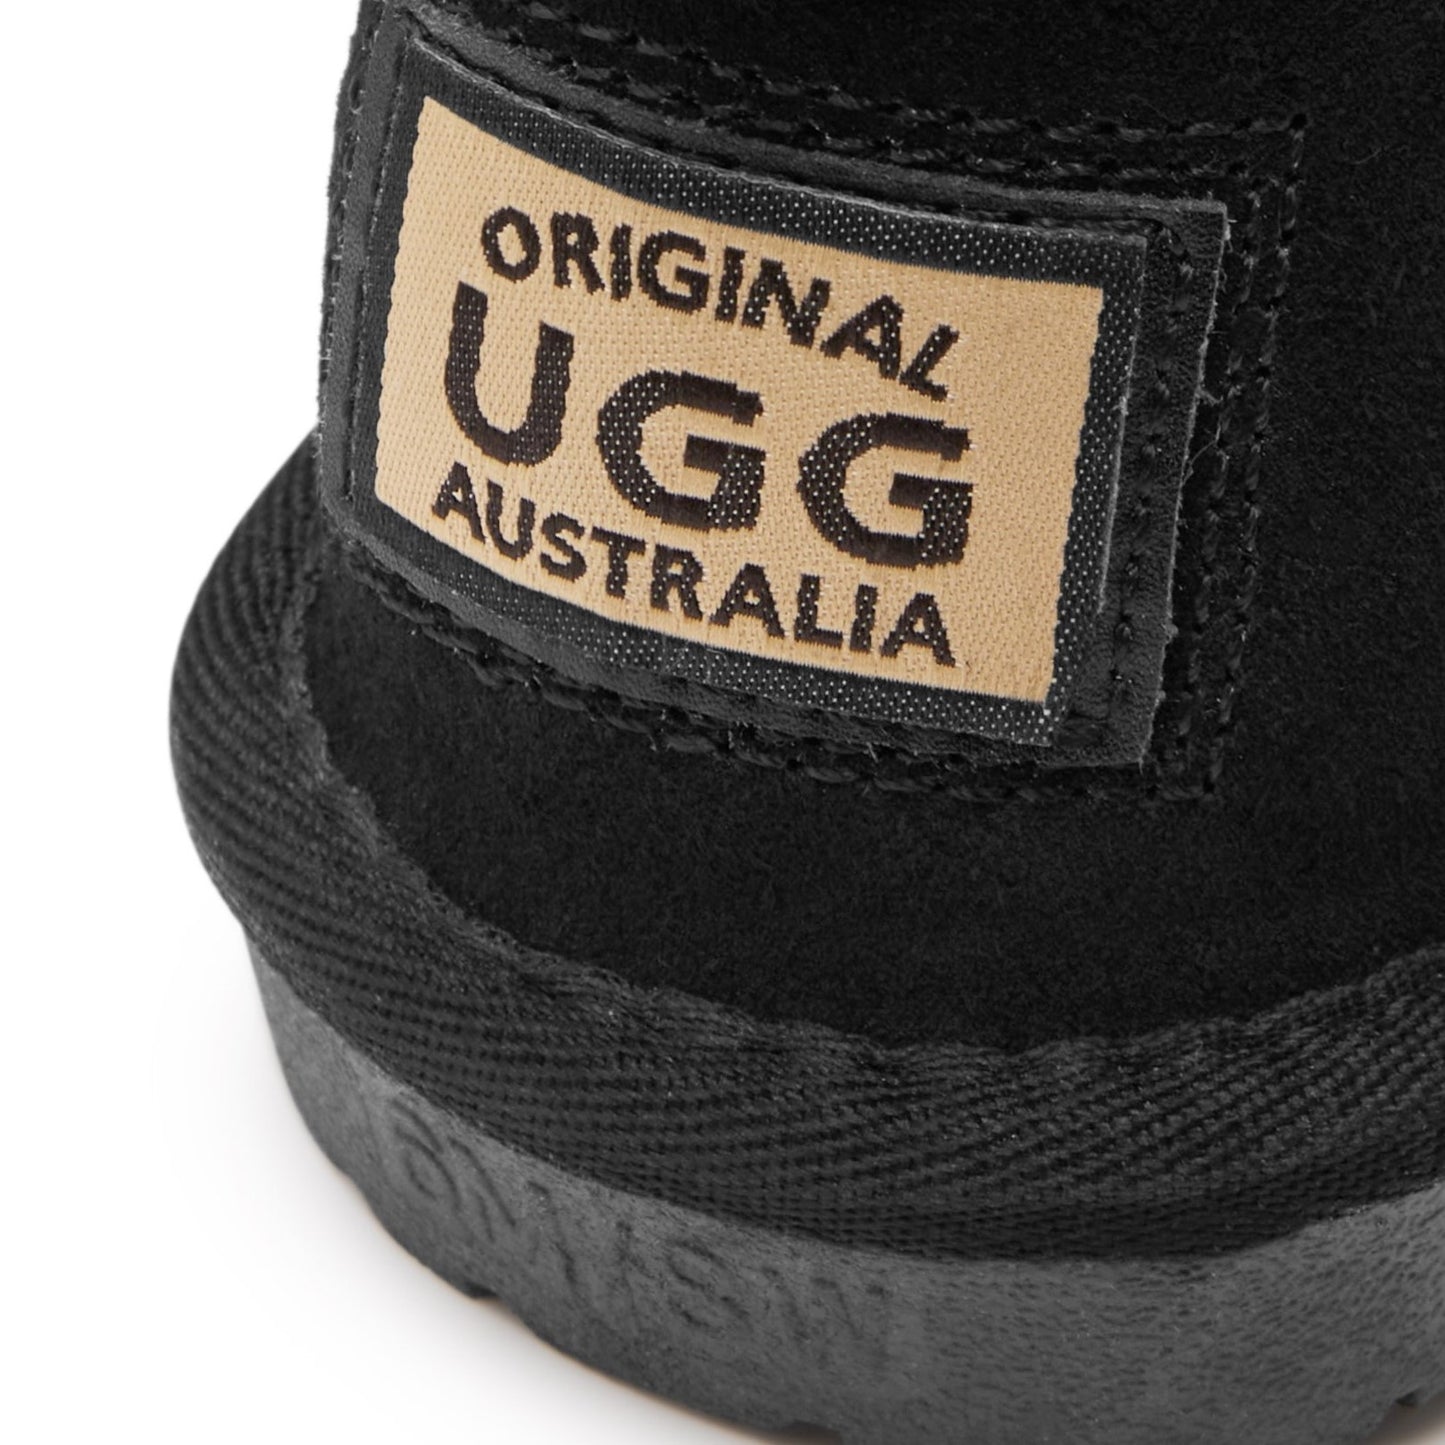 Originals Ugg Australia Branded Mini Sheepskin Boot Black